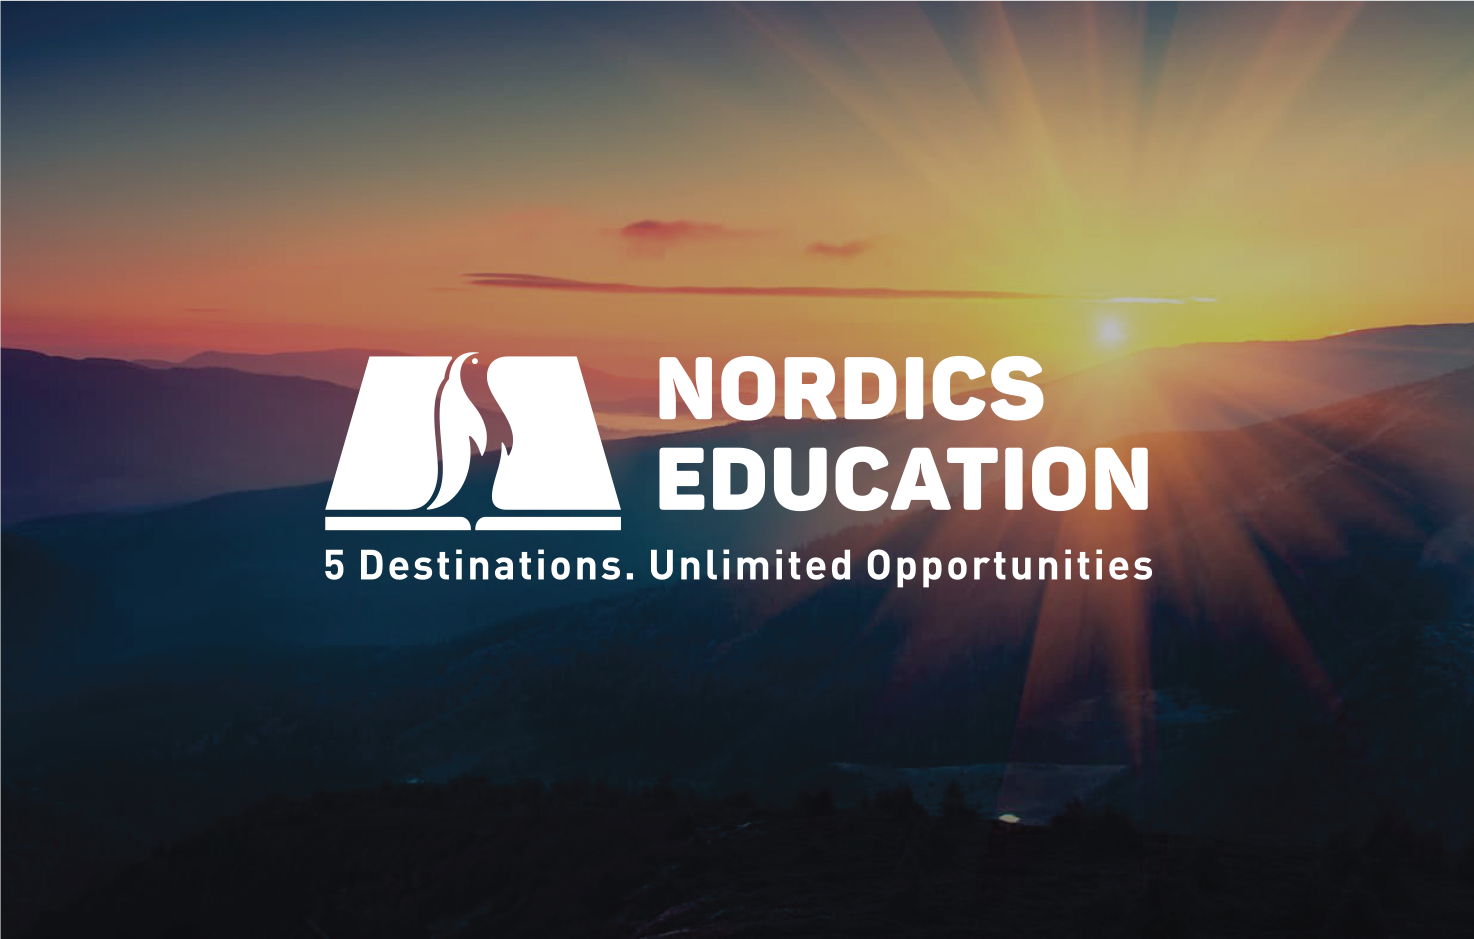 Nordics Education